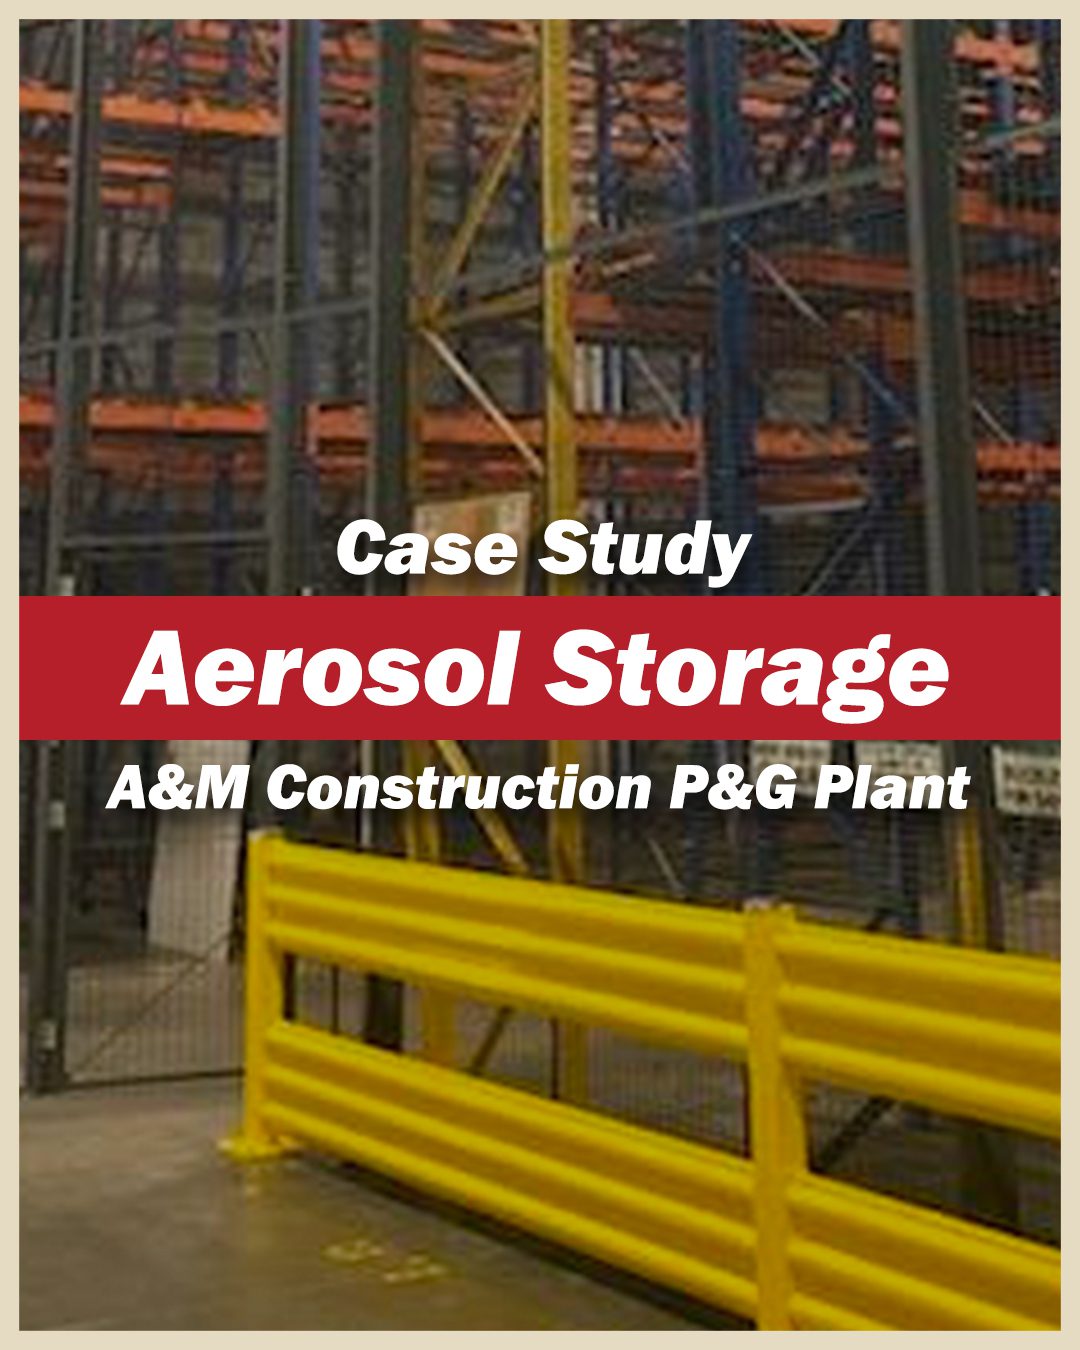 aerosol storage featured image